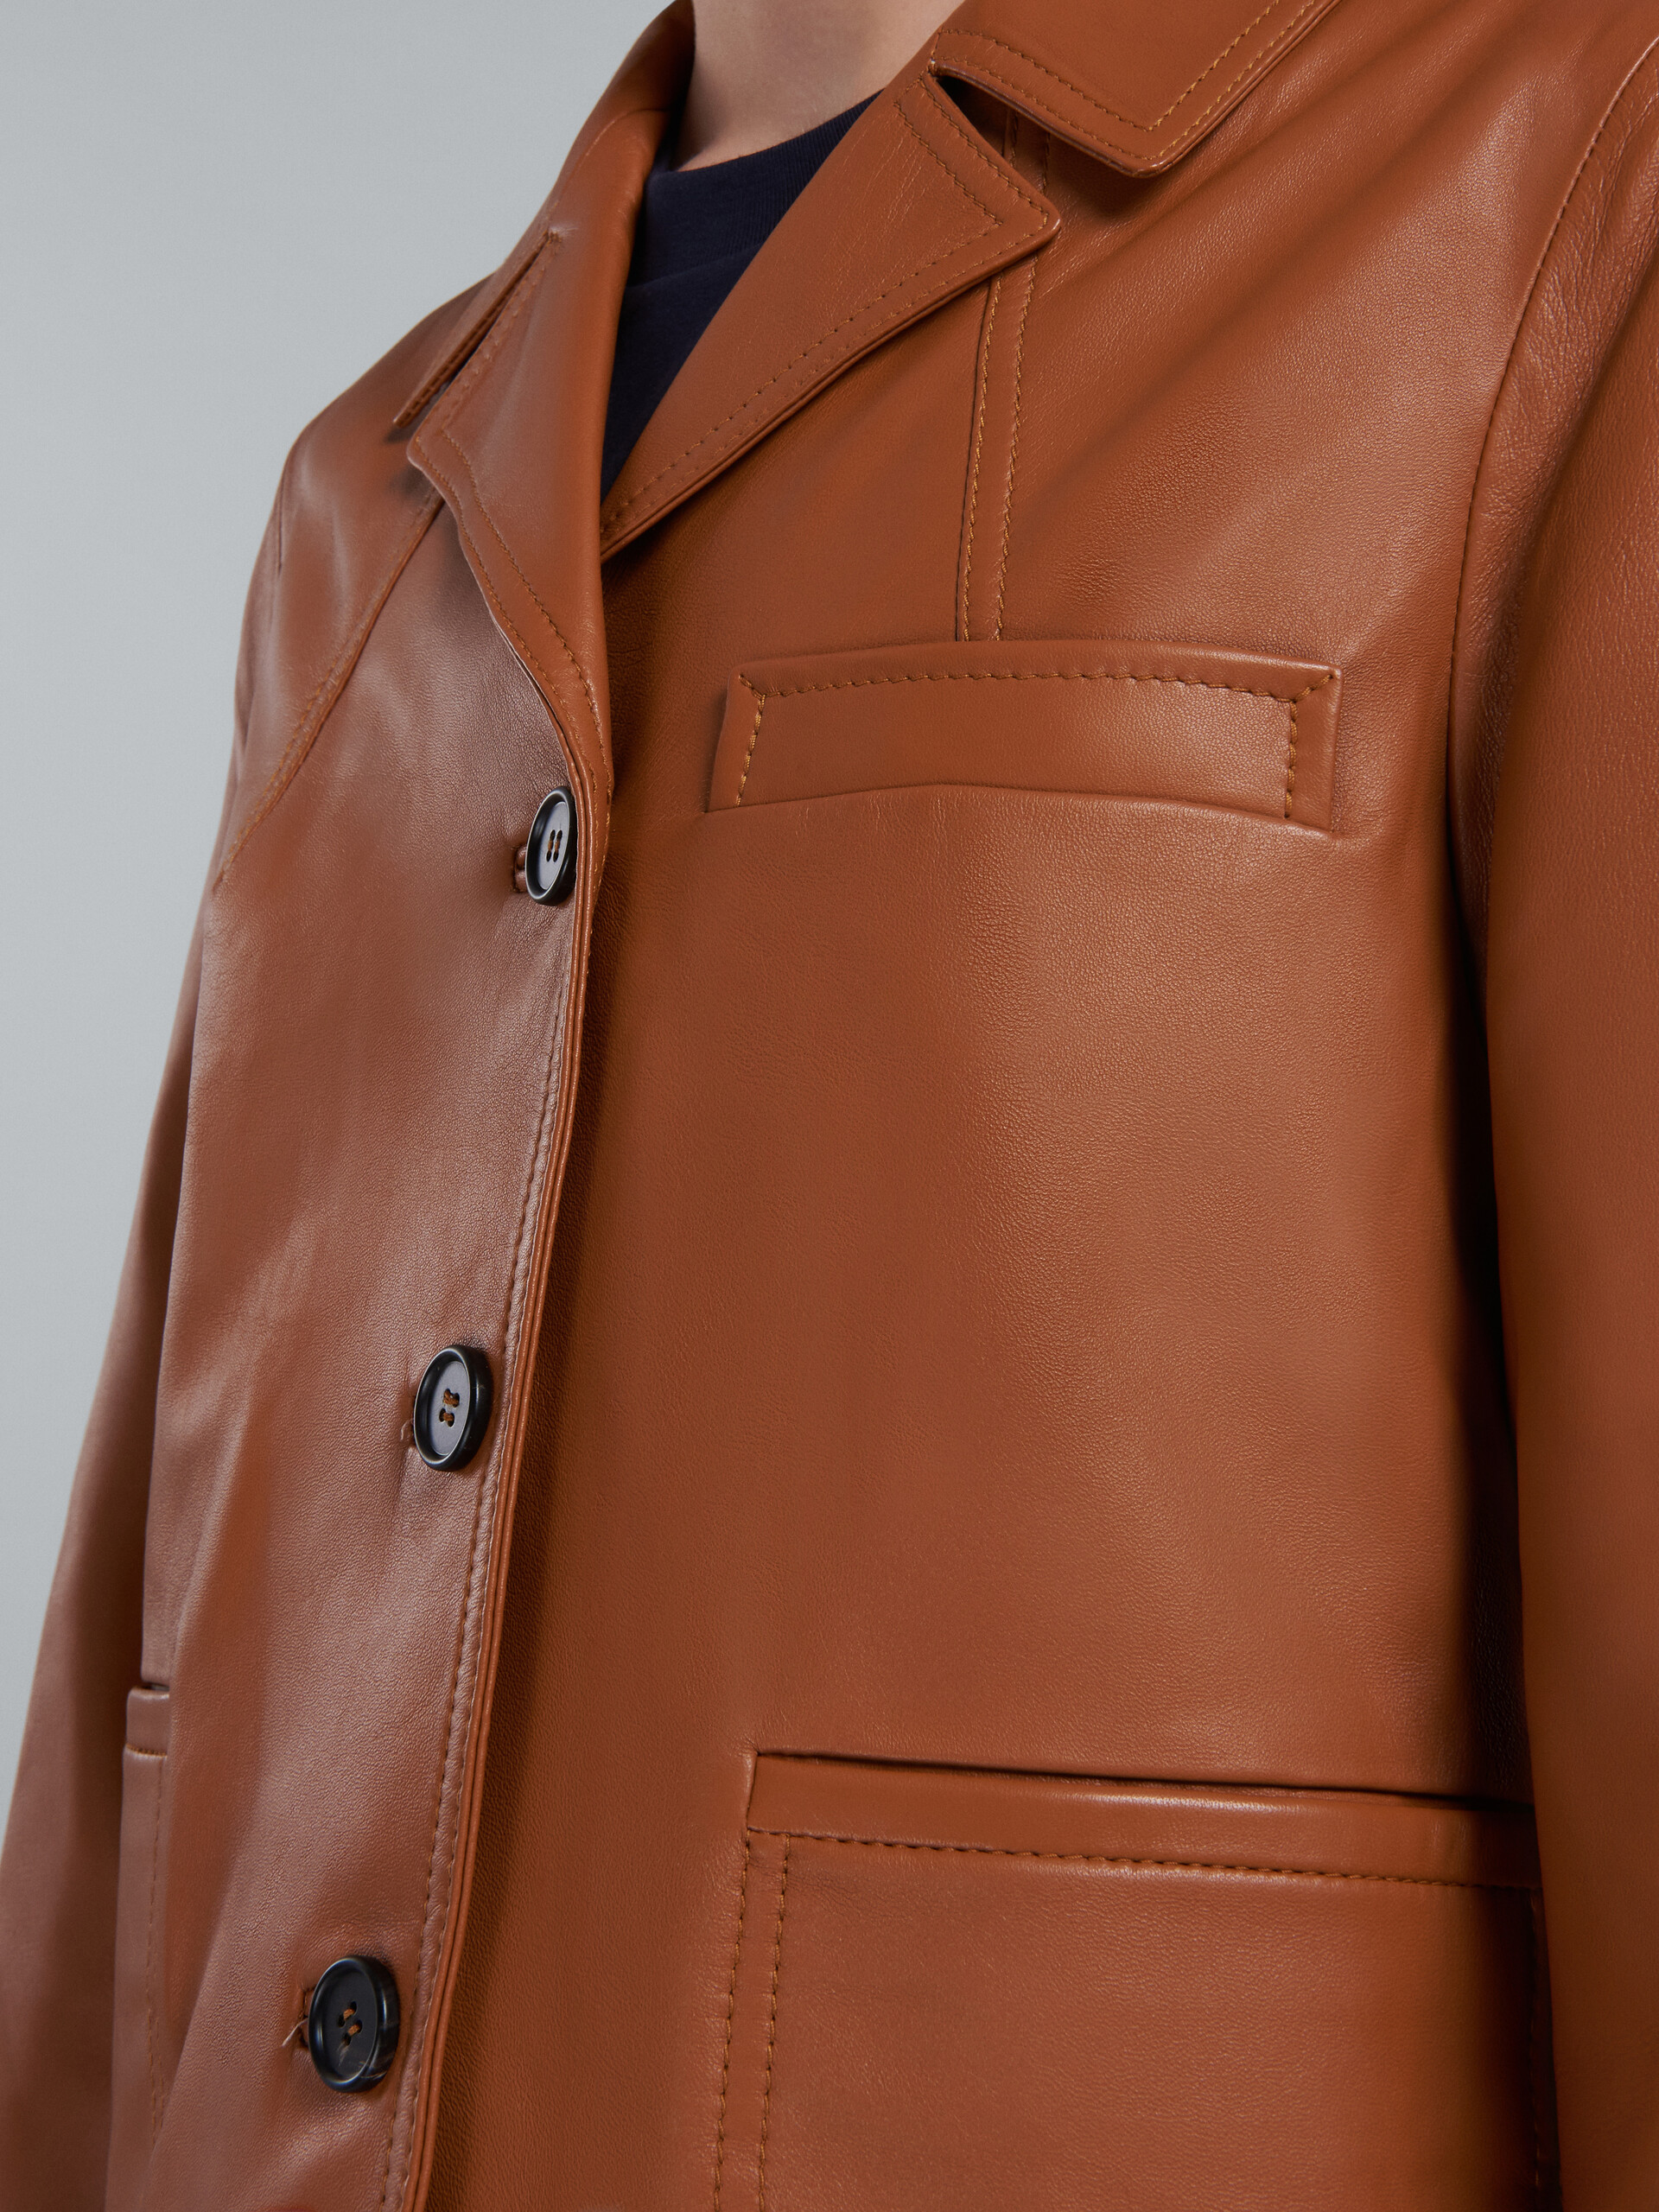 Brown nappa leather jacket - Jackets - Image 5